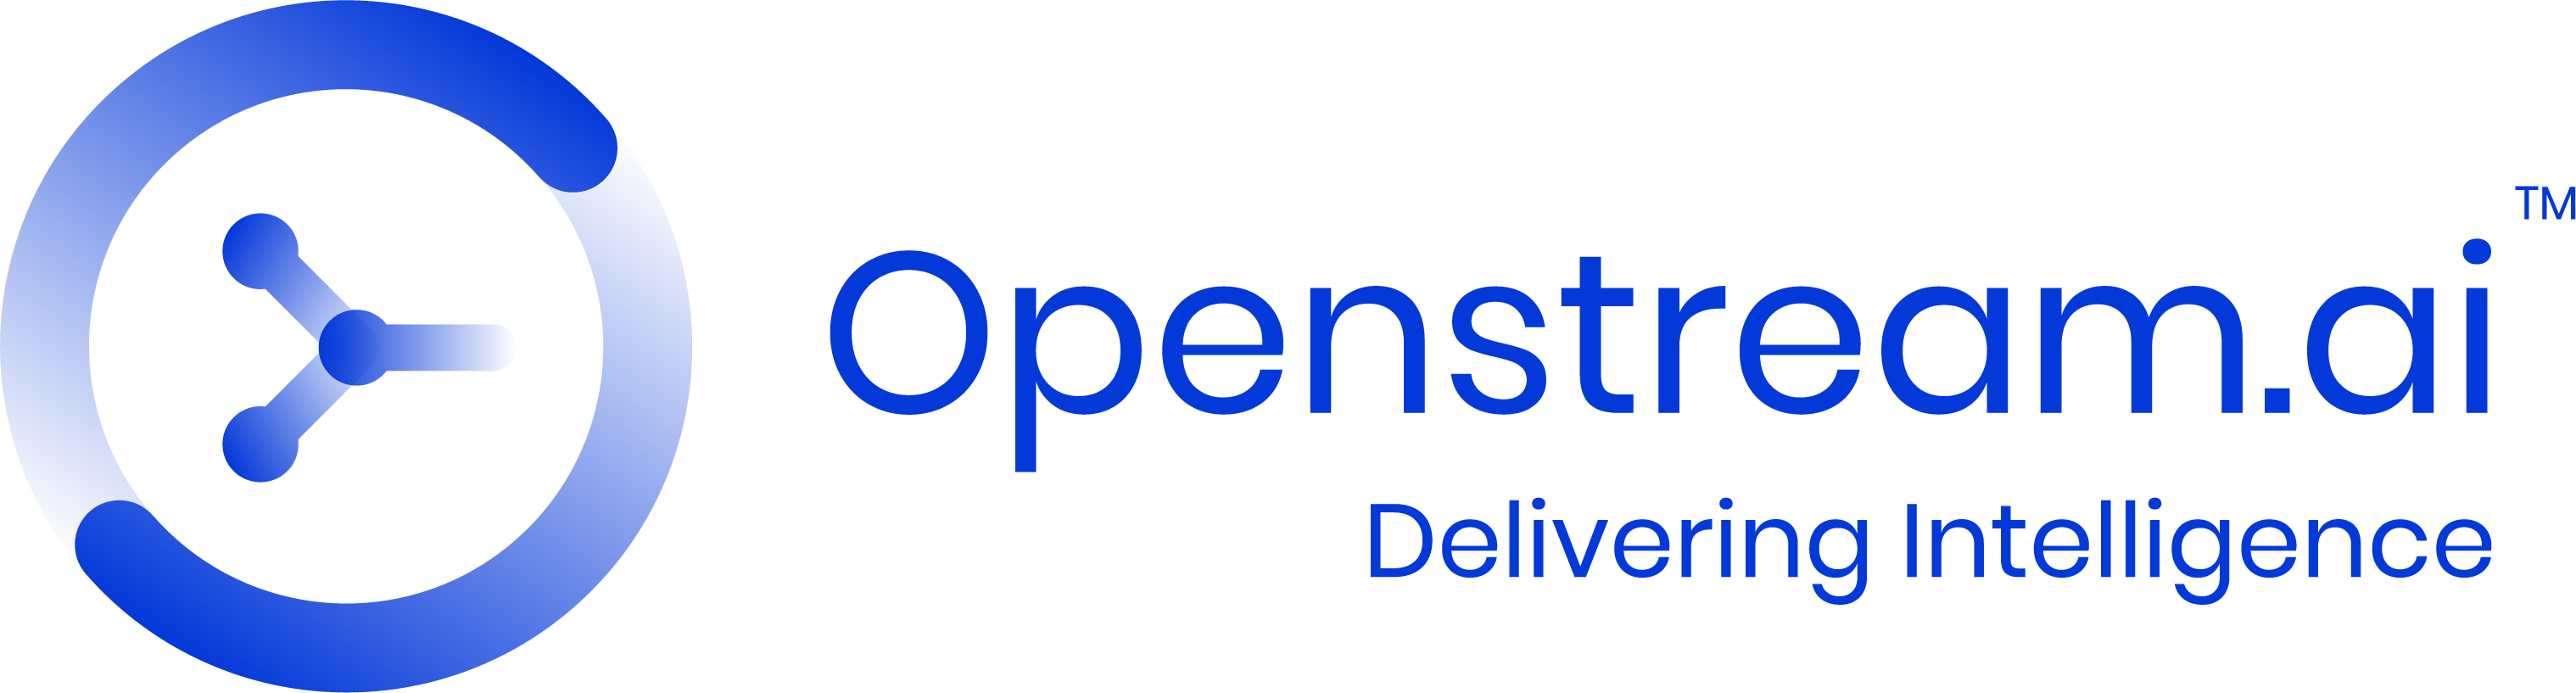 Openstream.ai Logo